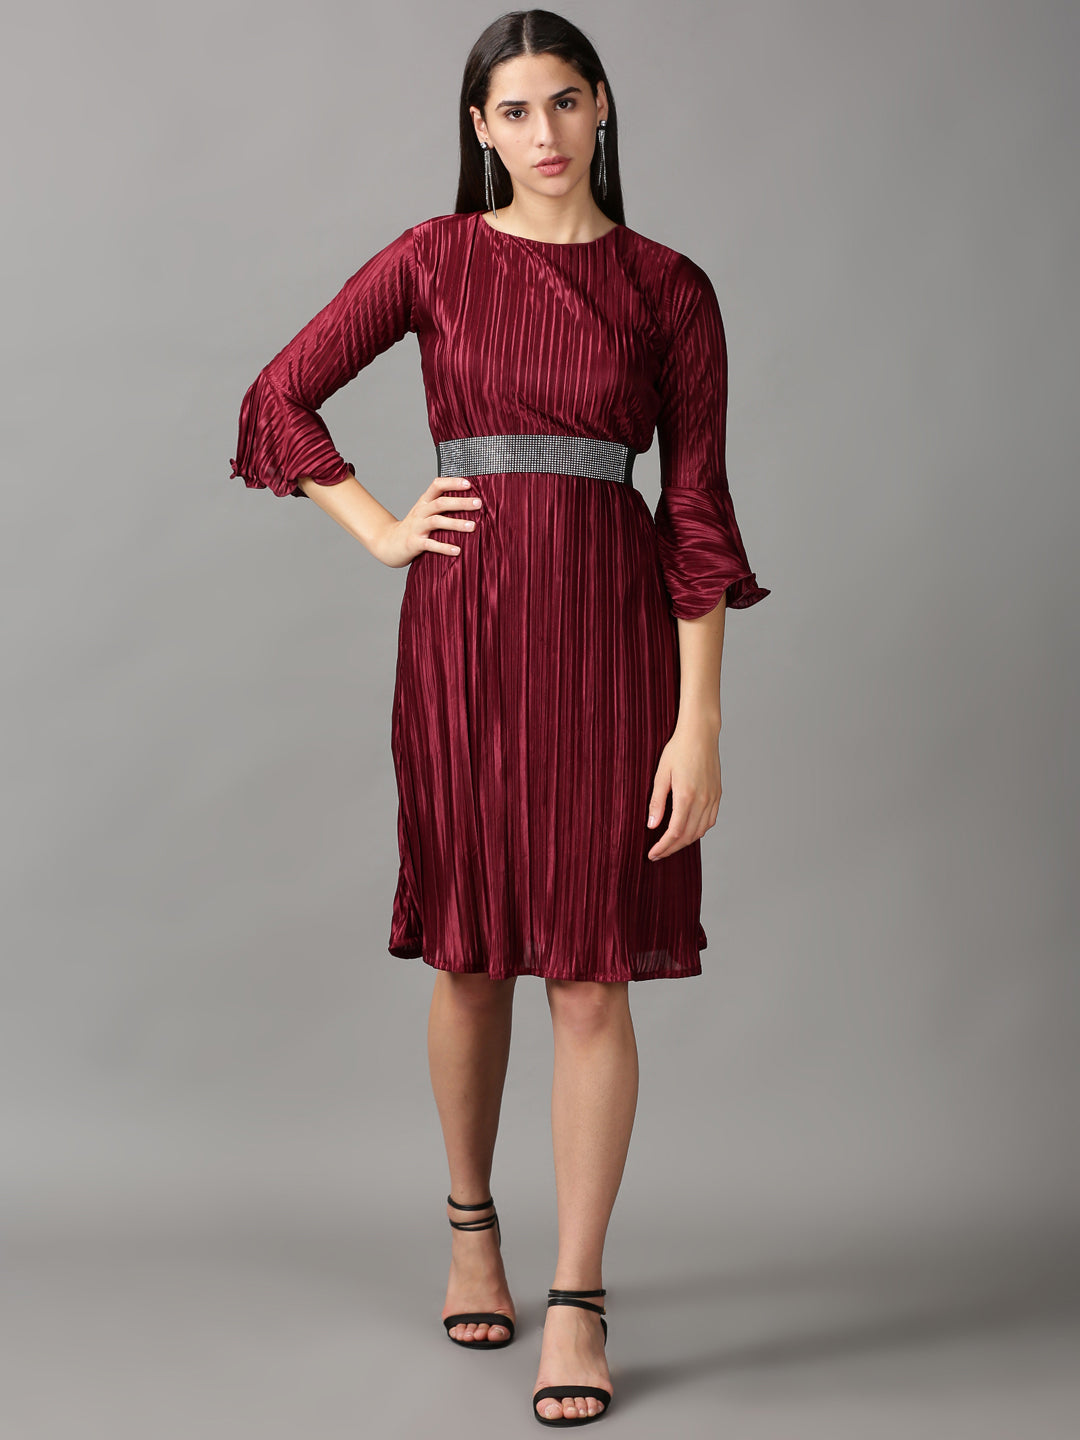 Women's Burgundy Solid A-Line Dress